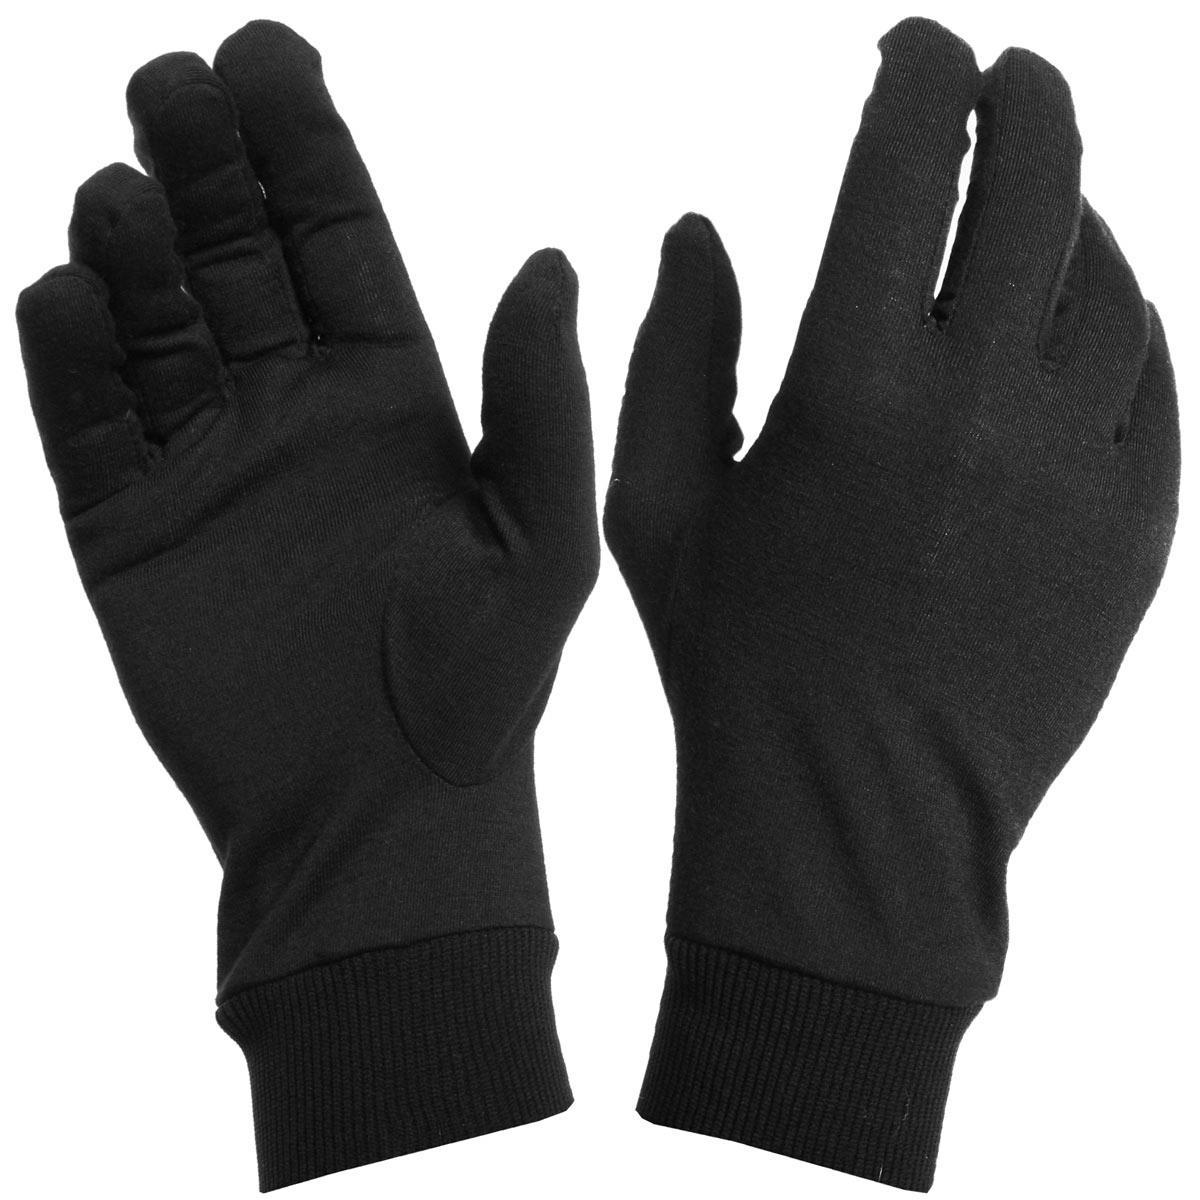 Winter's Edge Glove Liner - Unisex | Buckmans.com